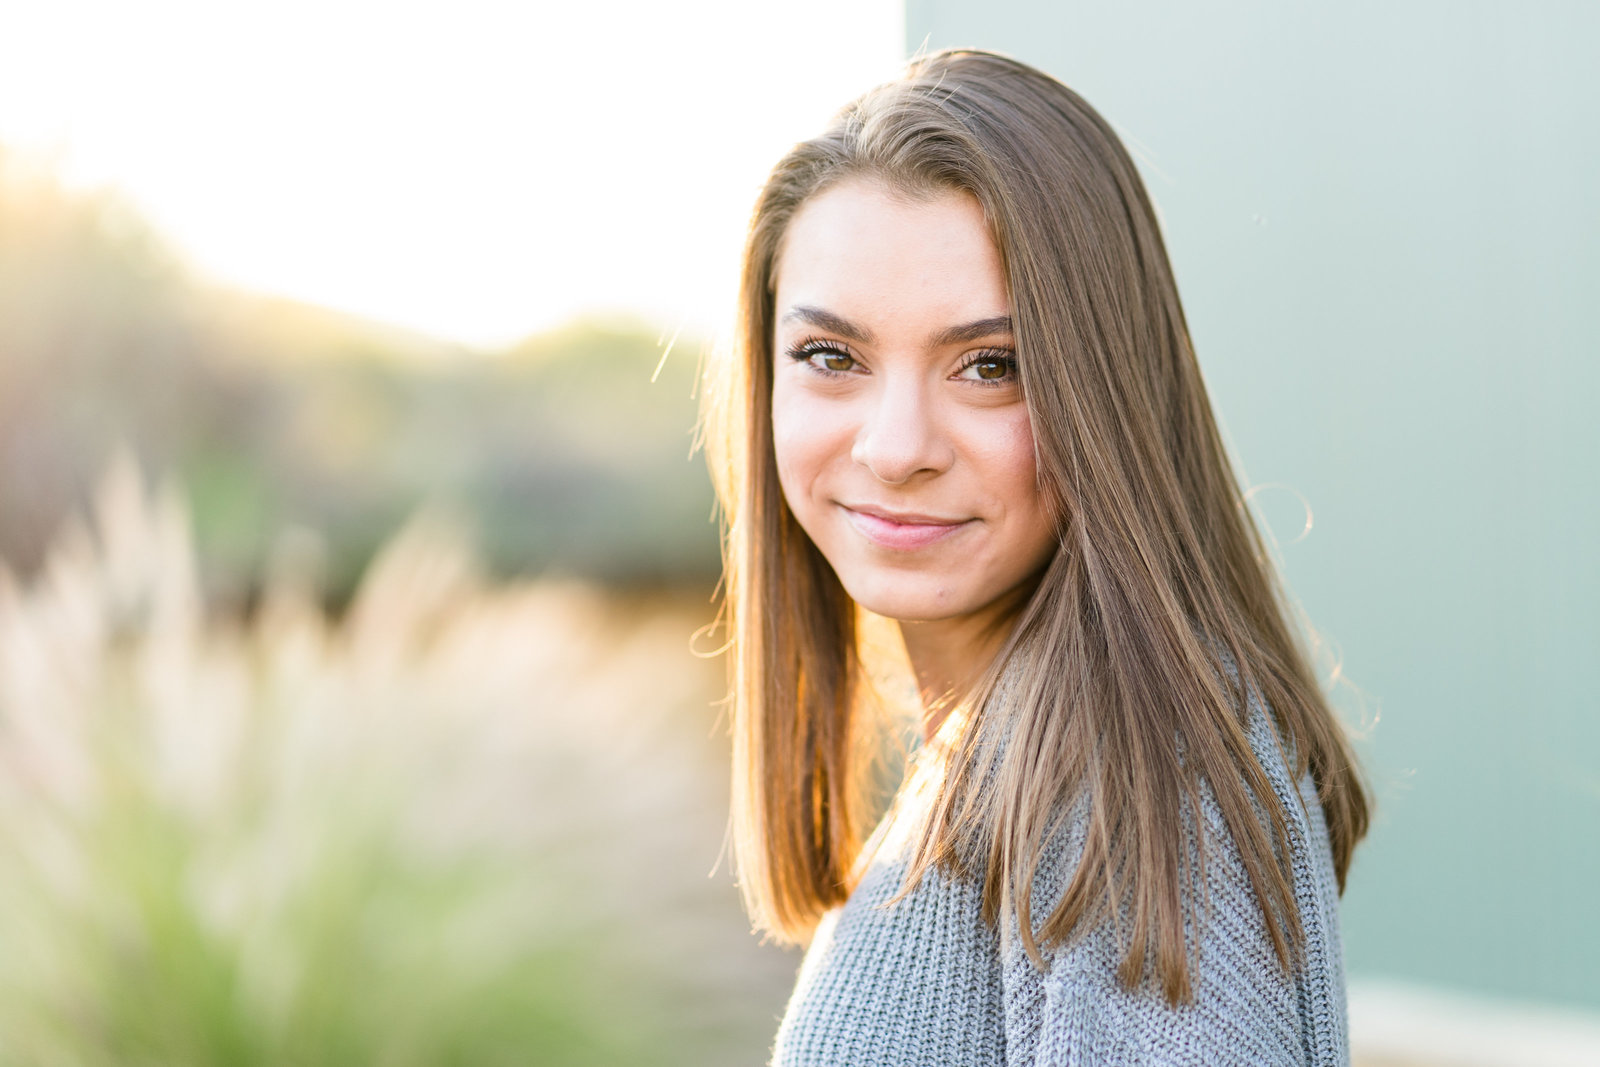 Senior girl smiling at camera in front of green wall